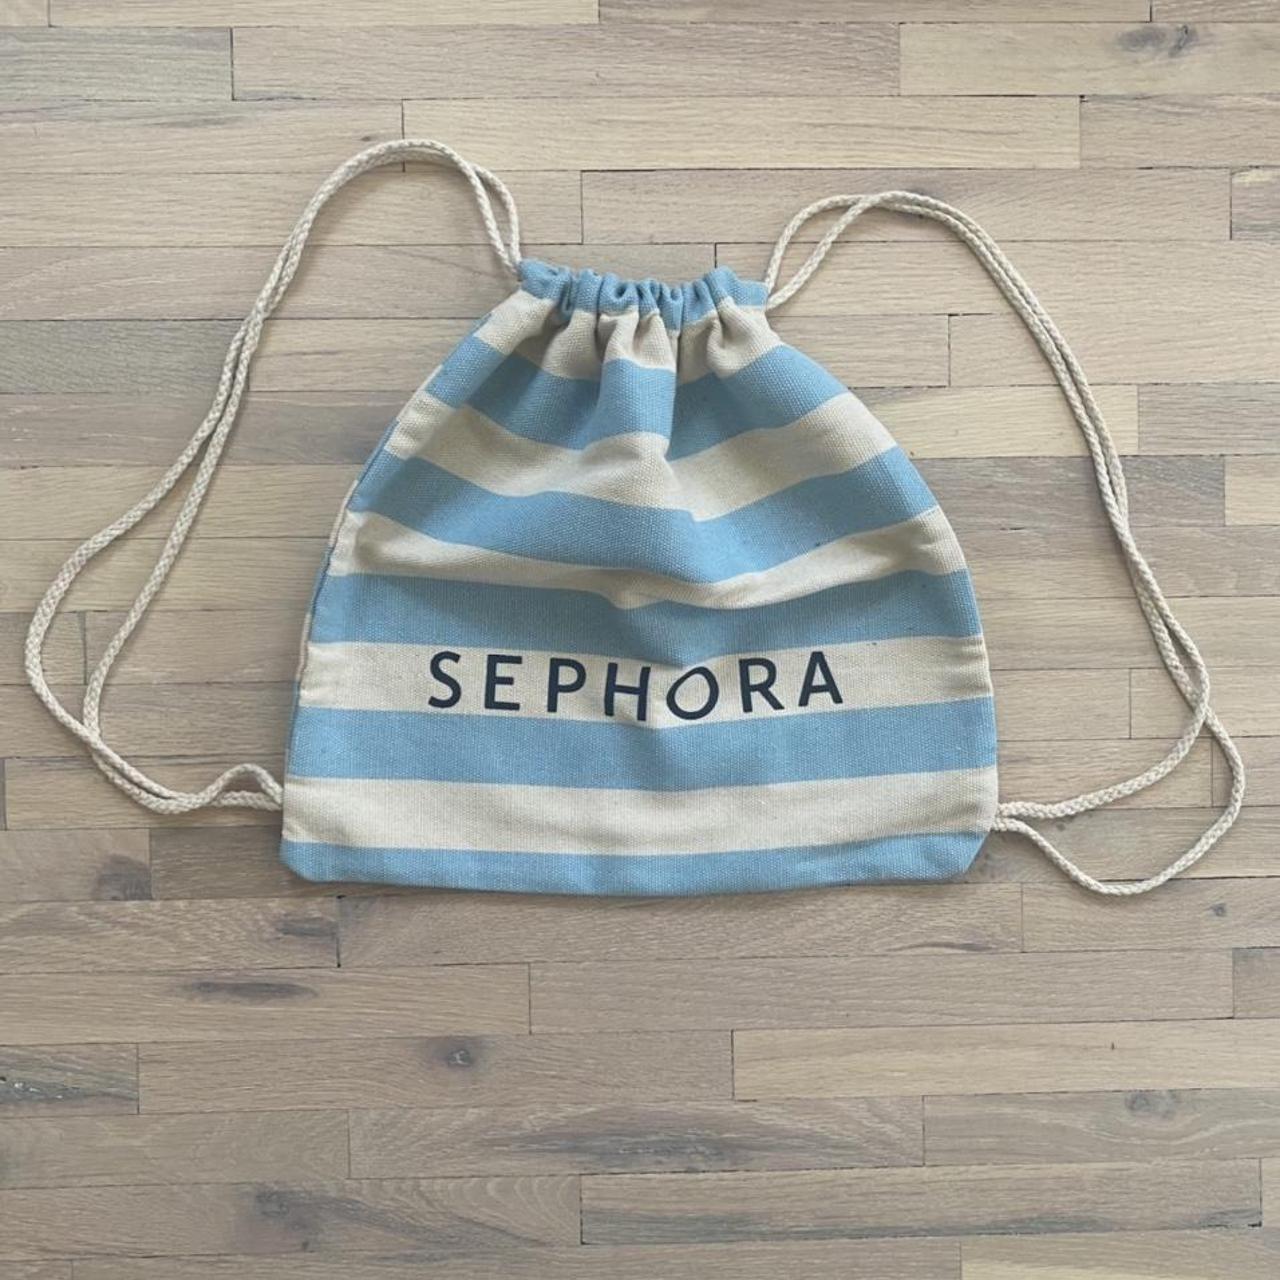 Sephora Women's White and Blue Bag